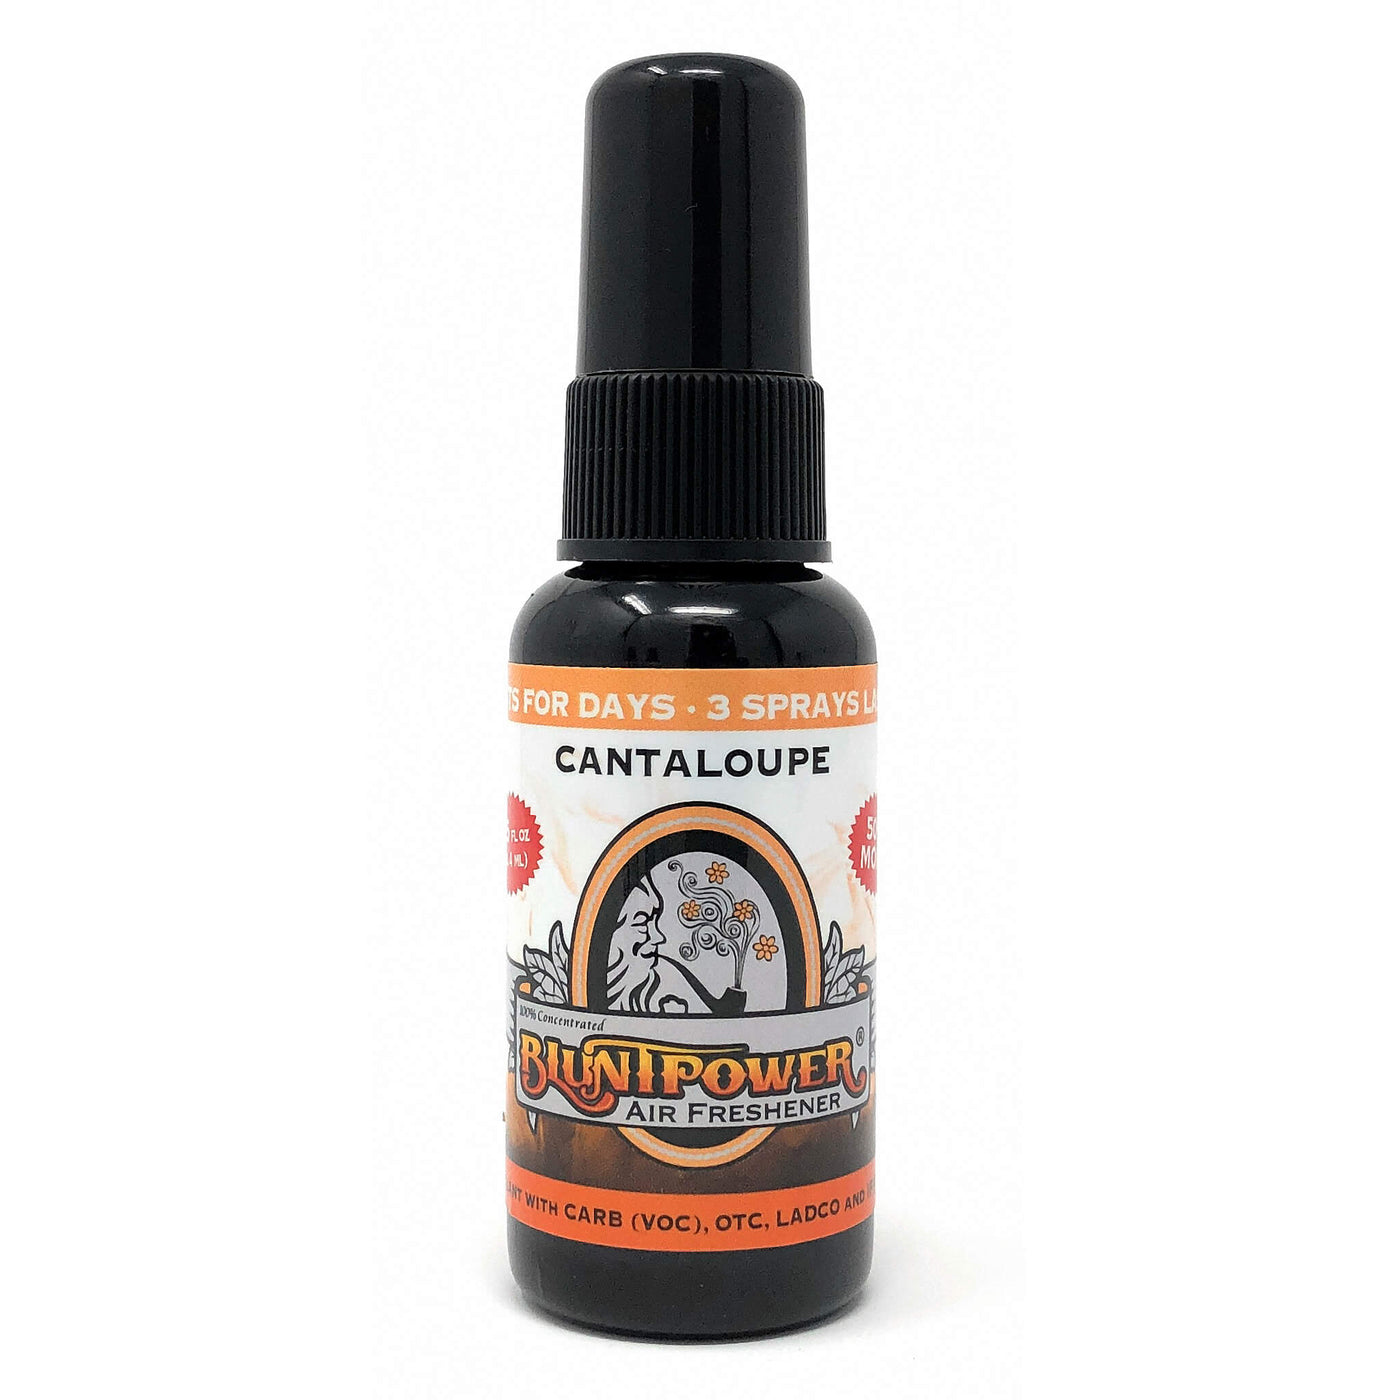 Cantaloupe Long Lasting Spray Air Freshener Bundle (5 Pack)